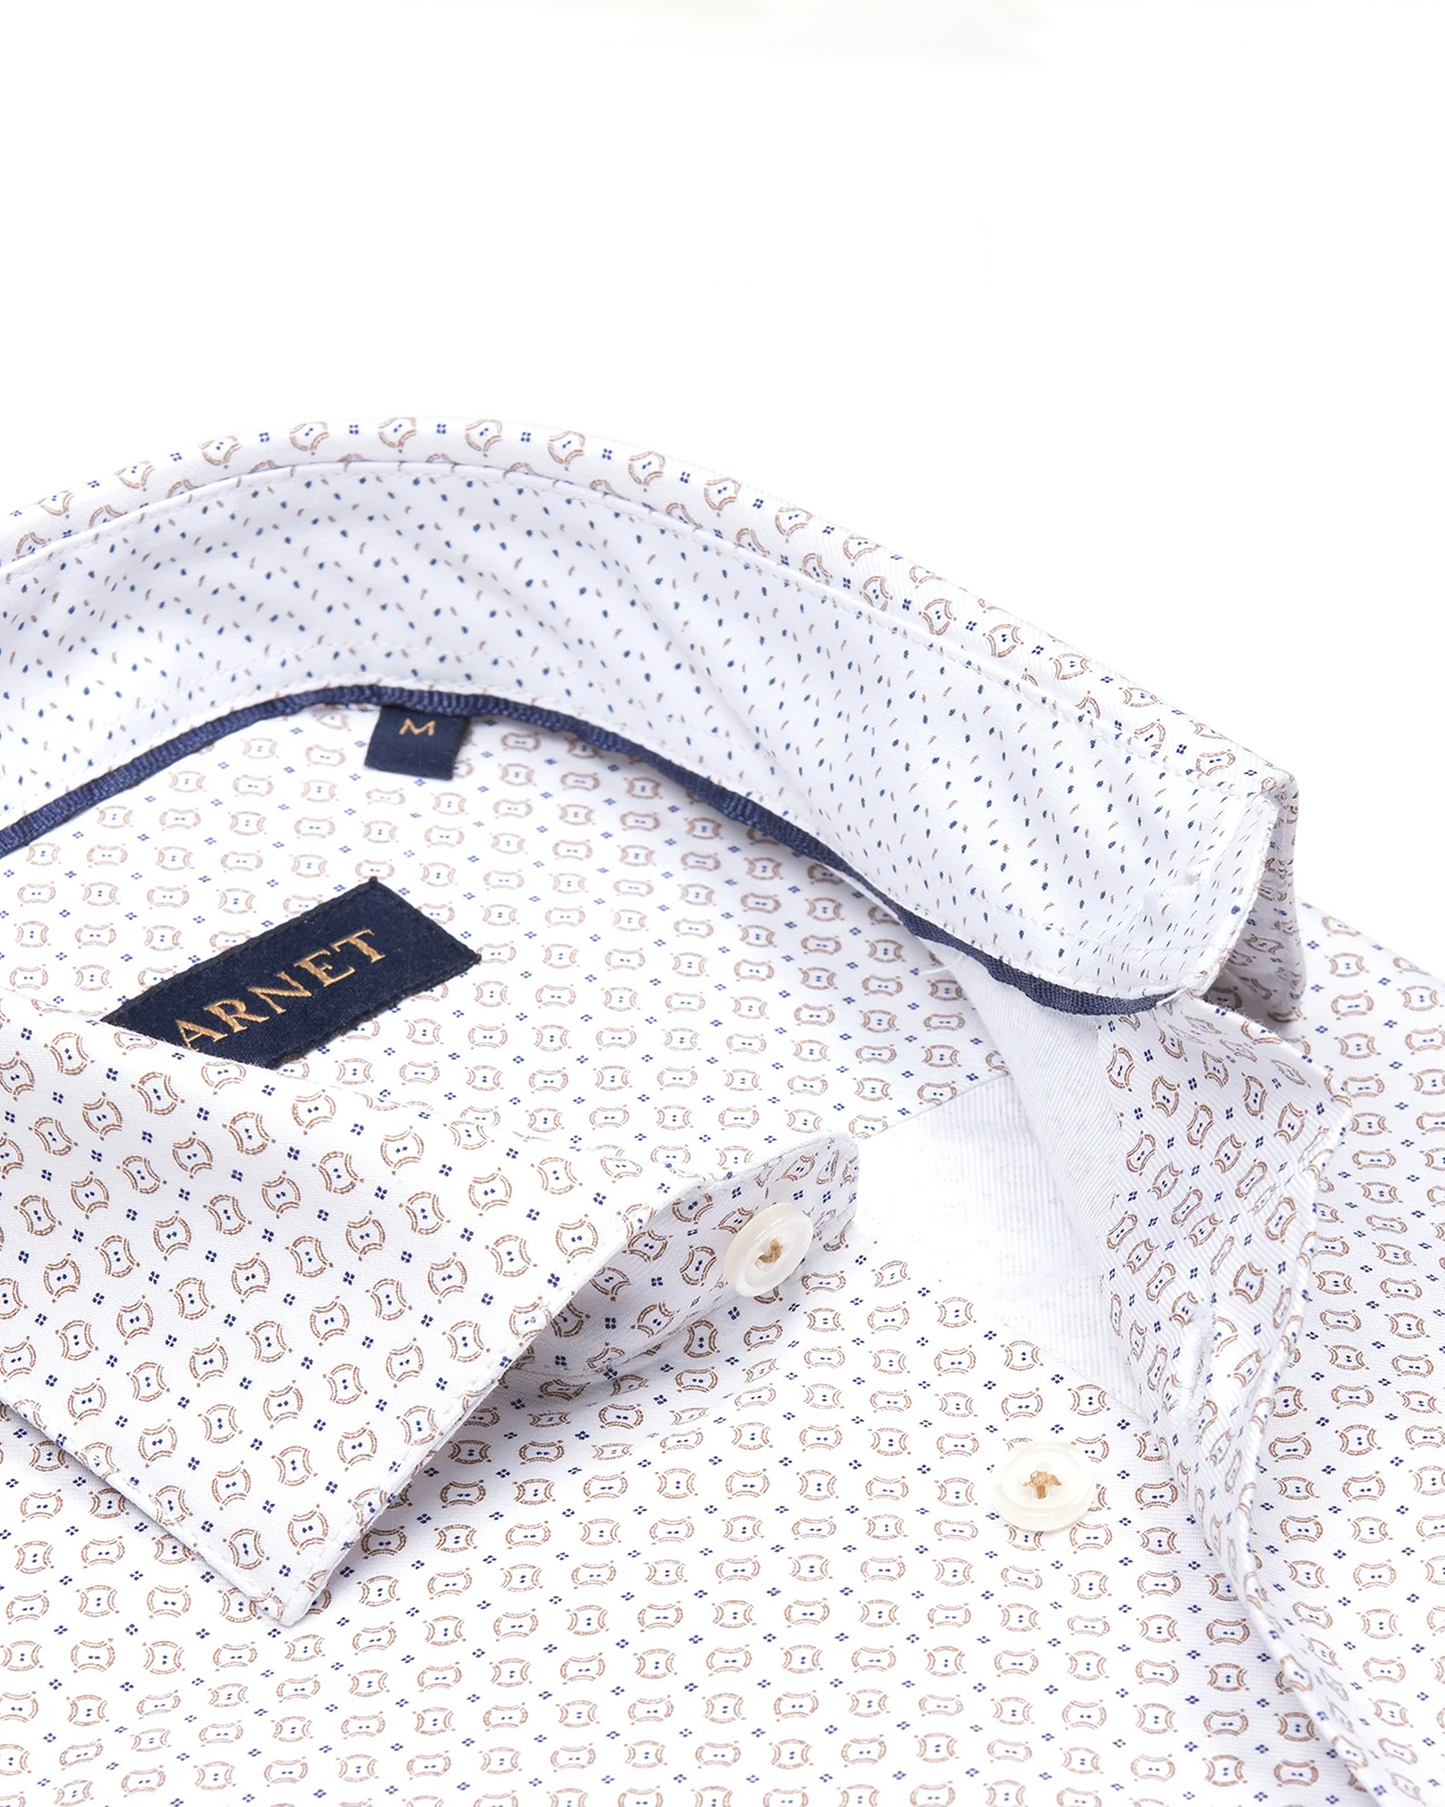 Garnet Beige Geometric Printed Long Sleeve Shirt